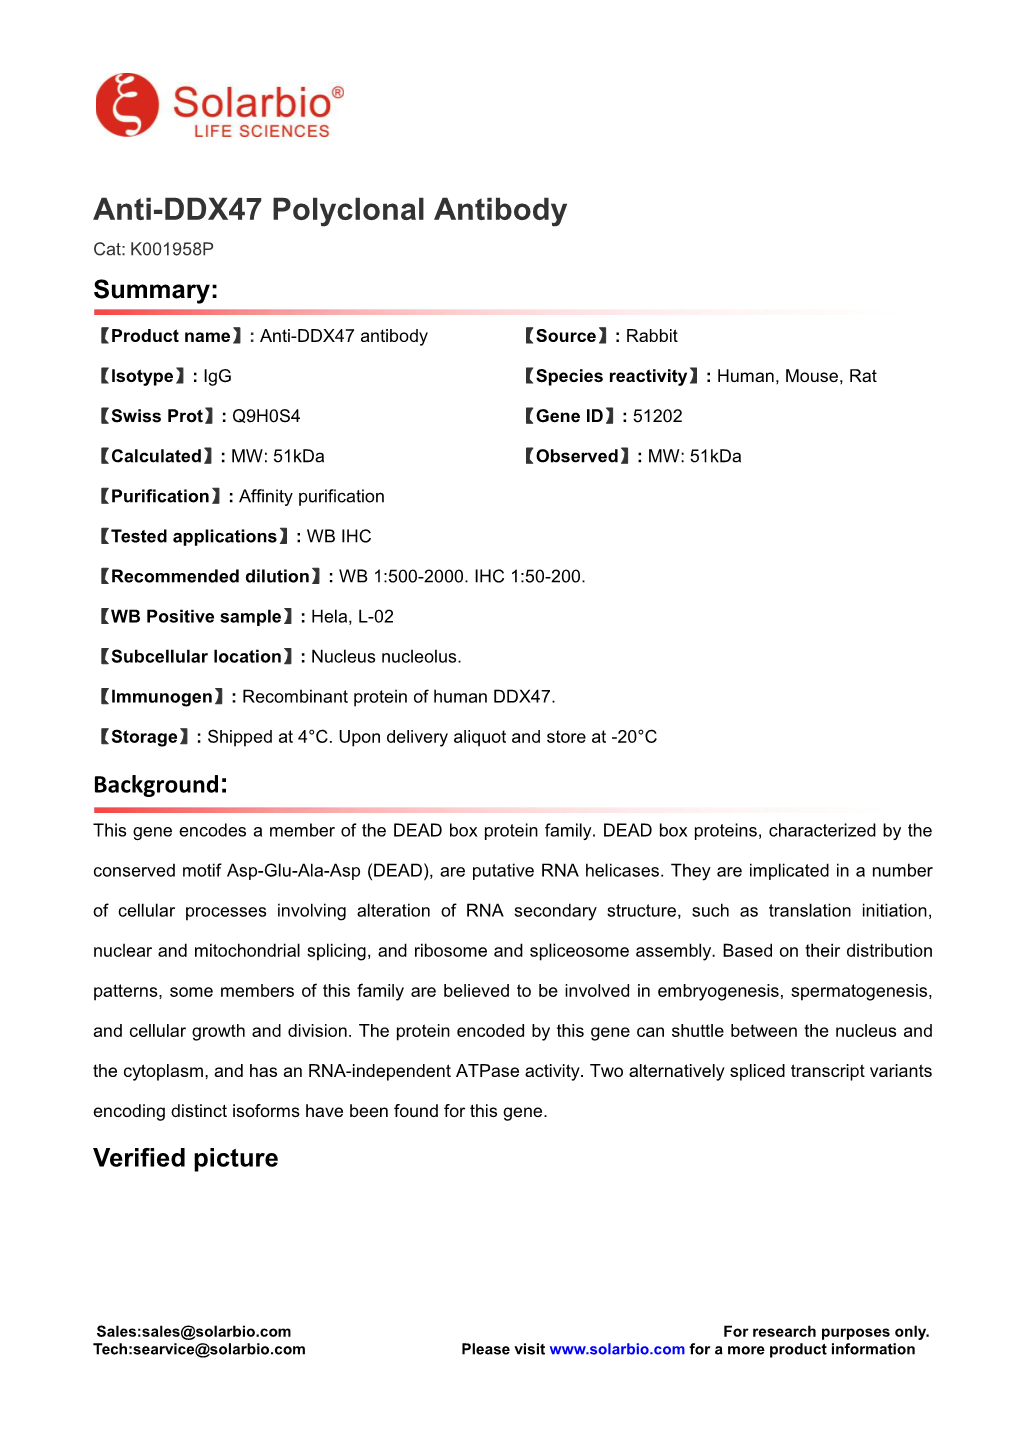 Anti-DDX47 Polyclonal Antibody Cat: K001958P Summary